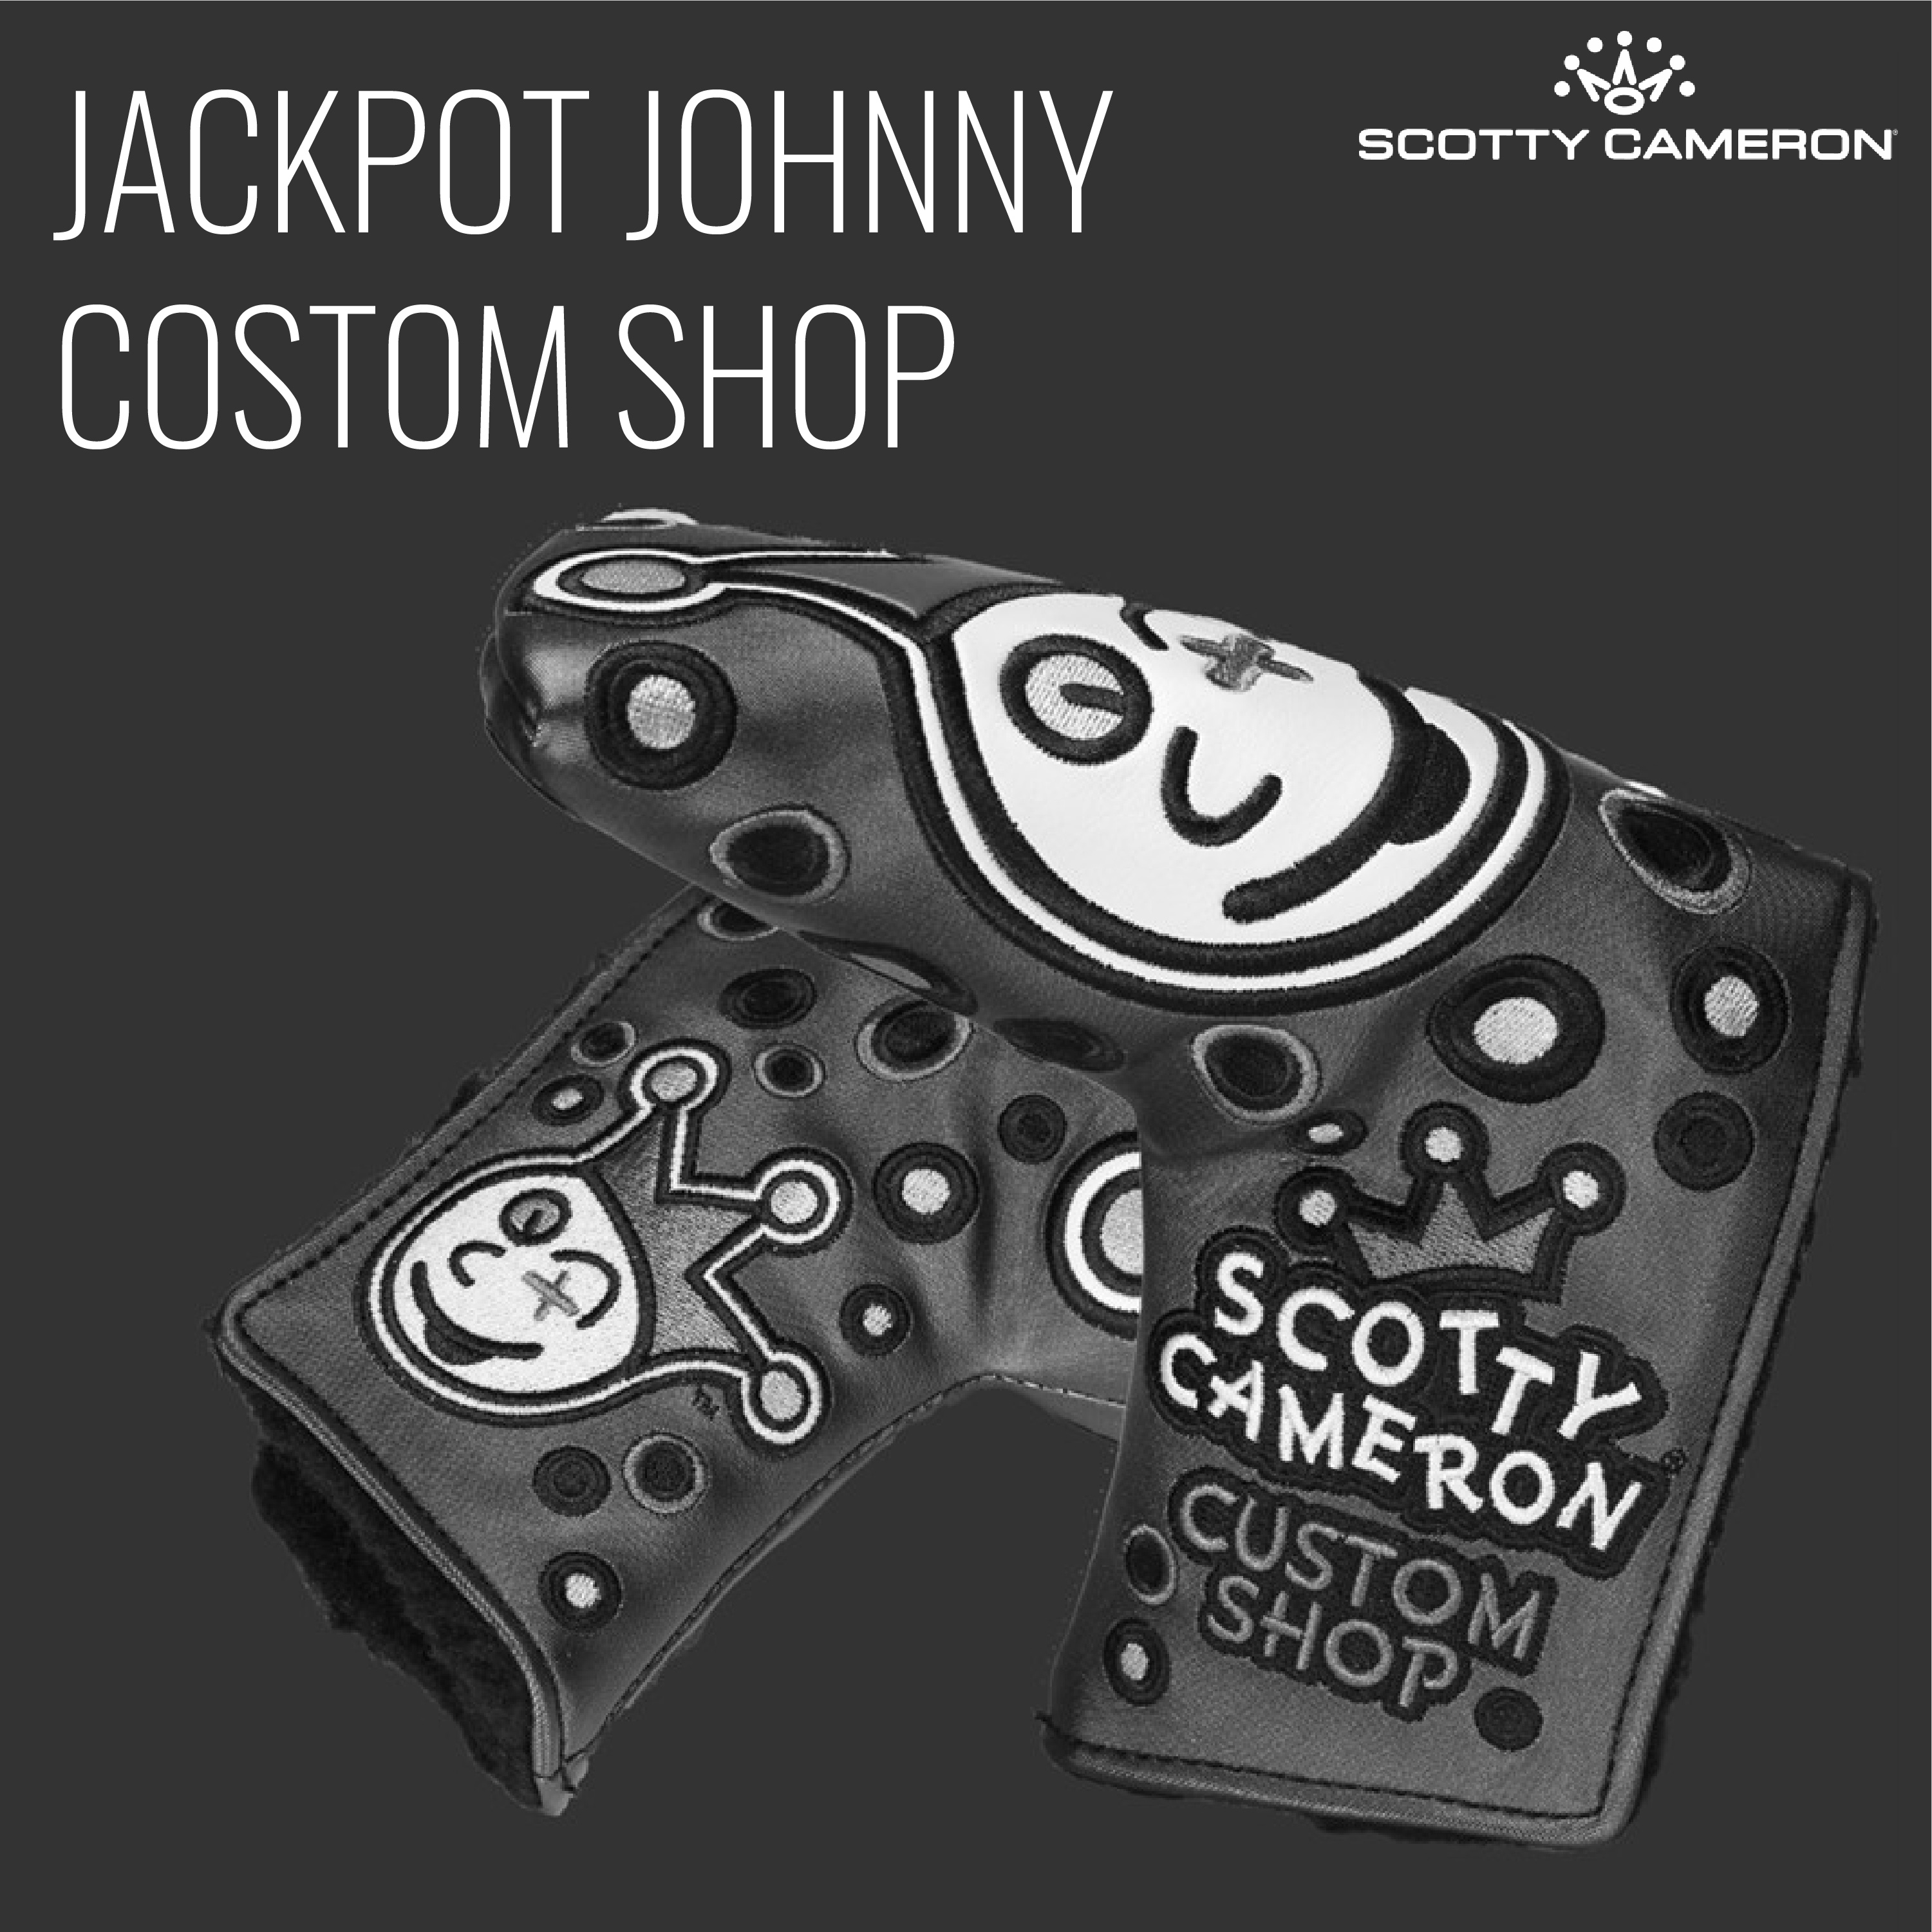 Scotty Cameron Jackpot Johnny